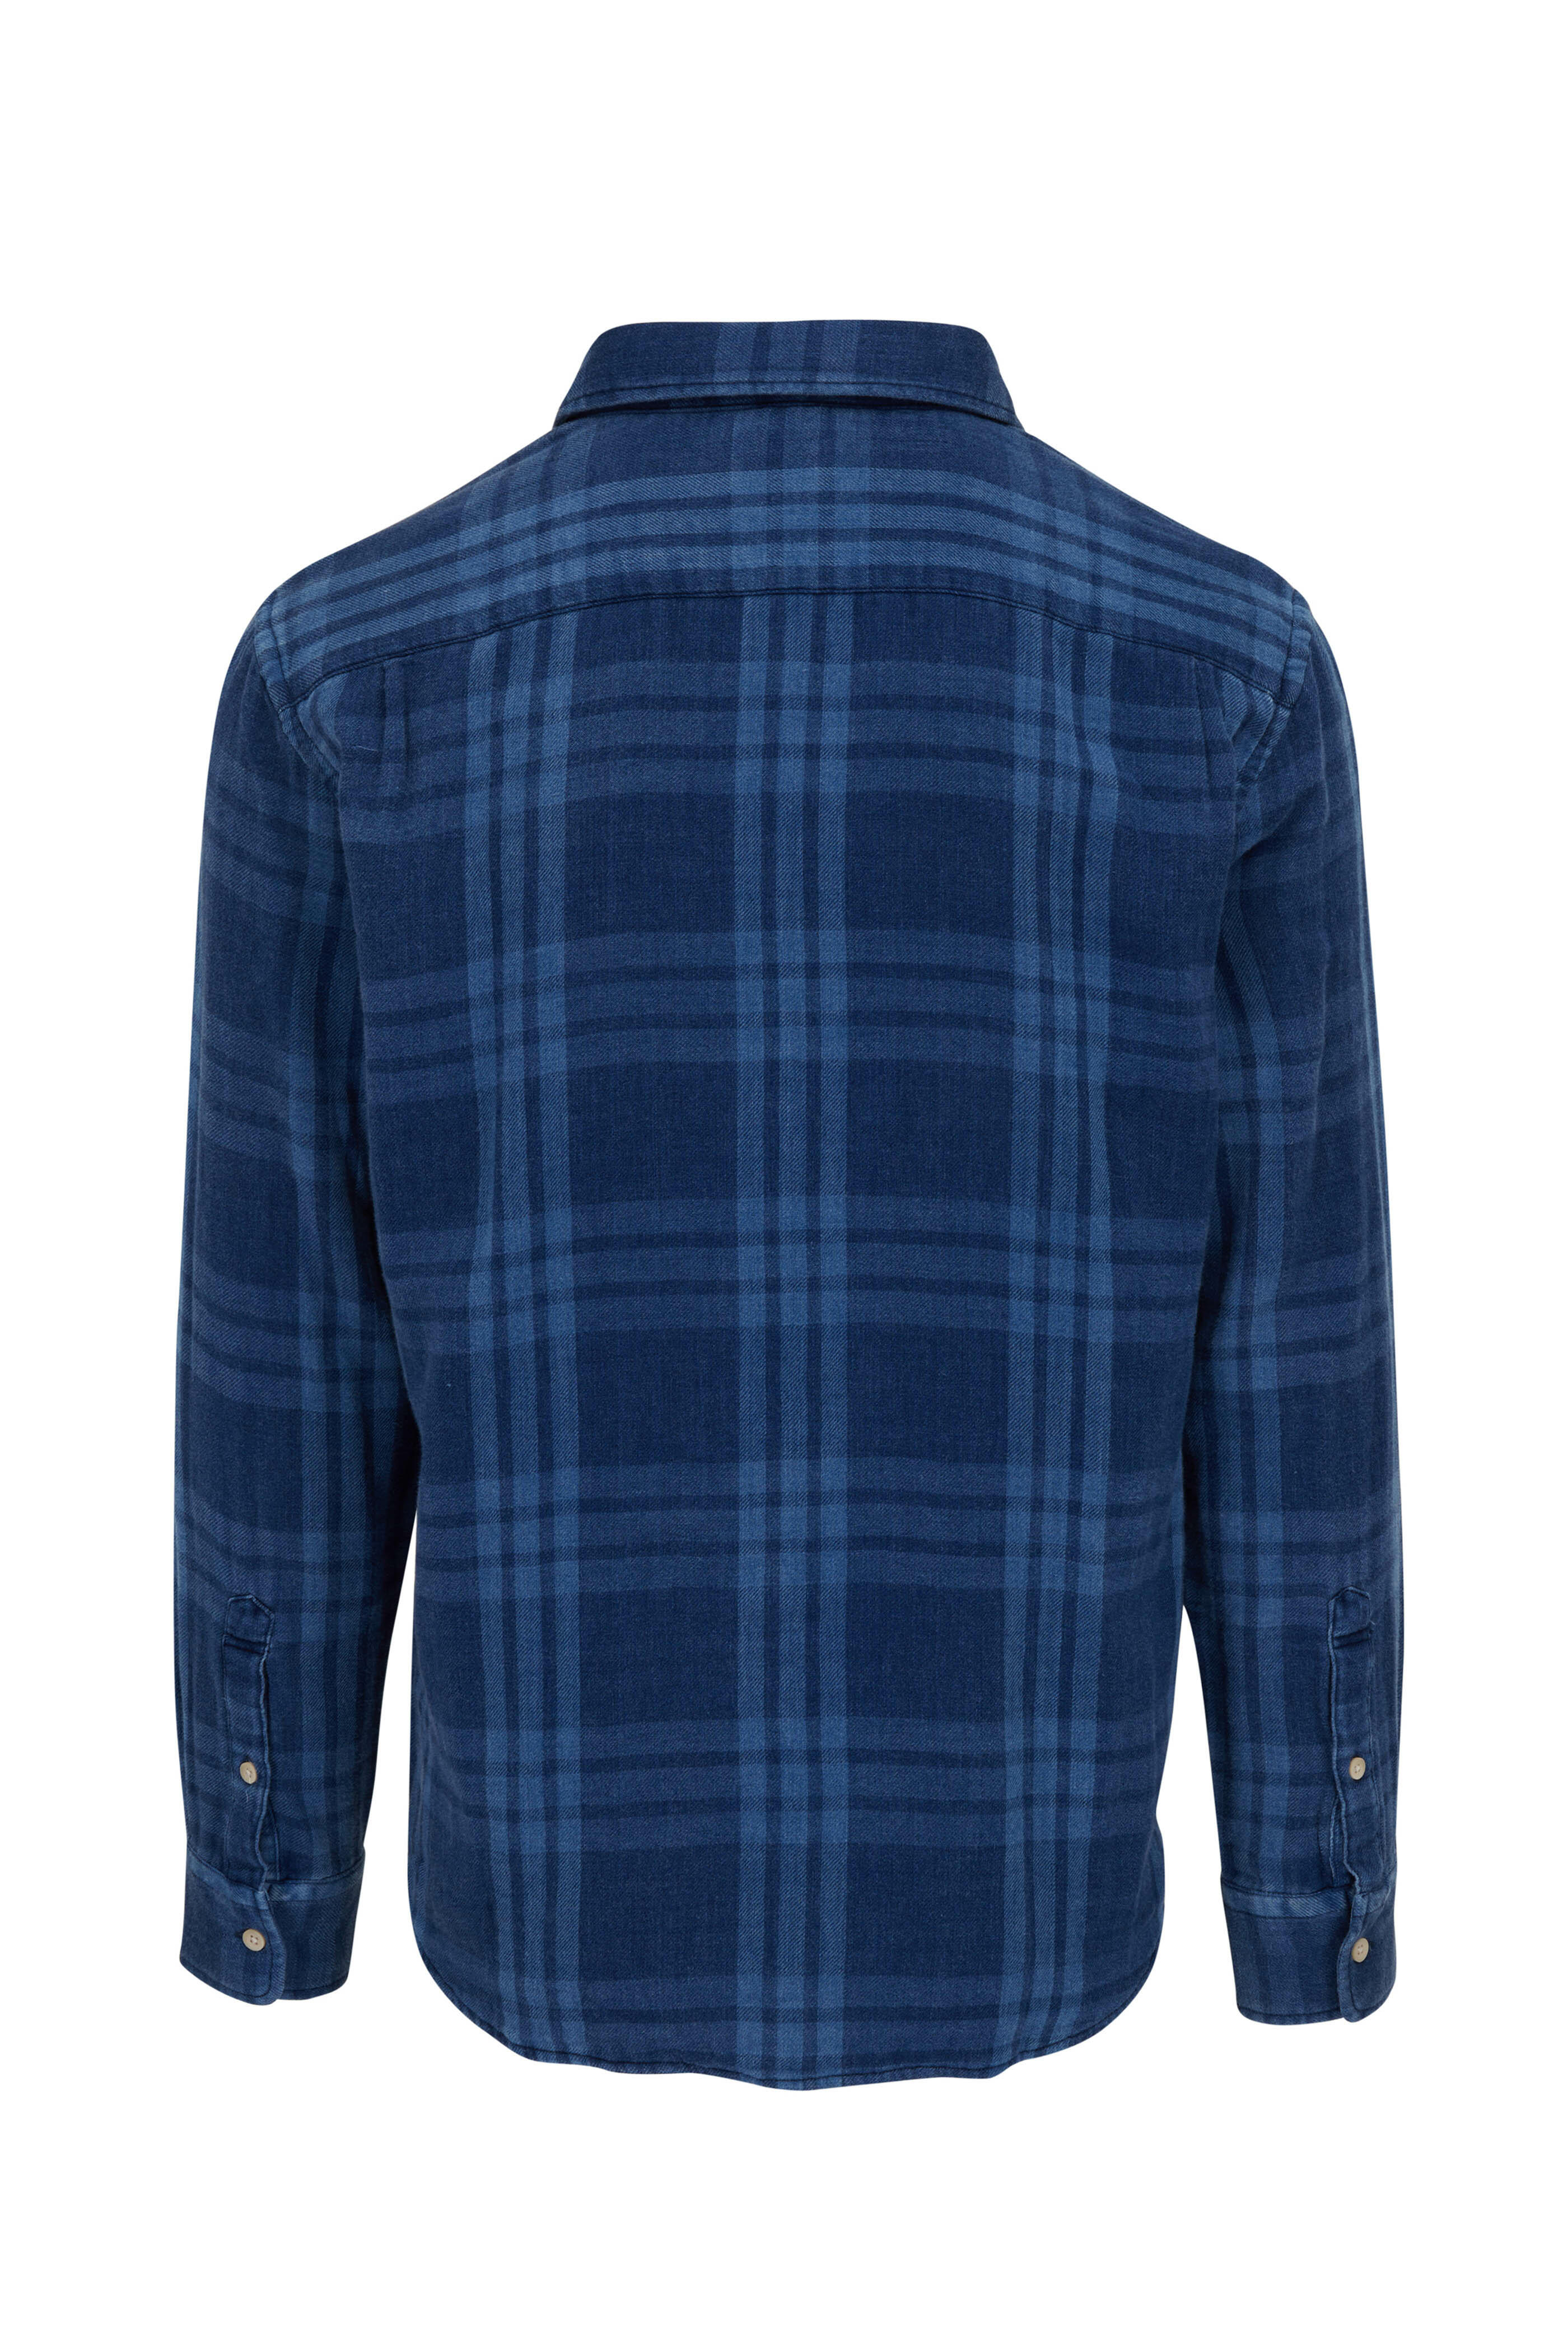 Faherty Brand - The Tony Indigo Mist Doublecloth Sport Shirt